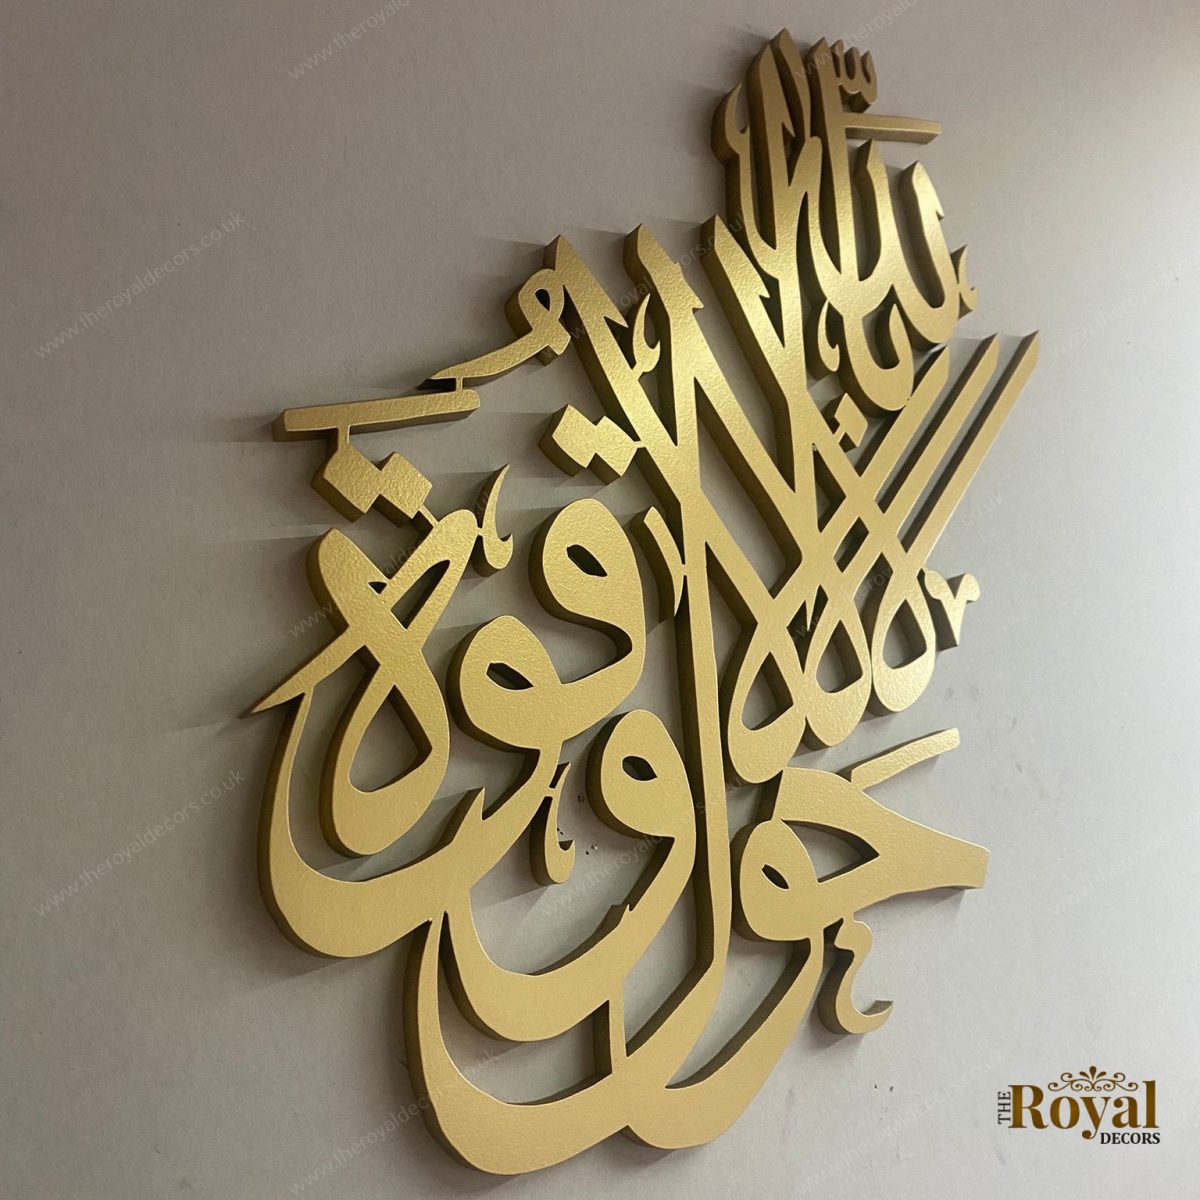 3D La Hawla Wala Quwwata Islamic Calligraphy Wall Art Arabic Home Decor